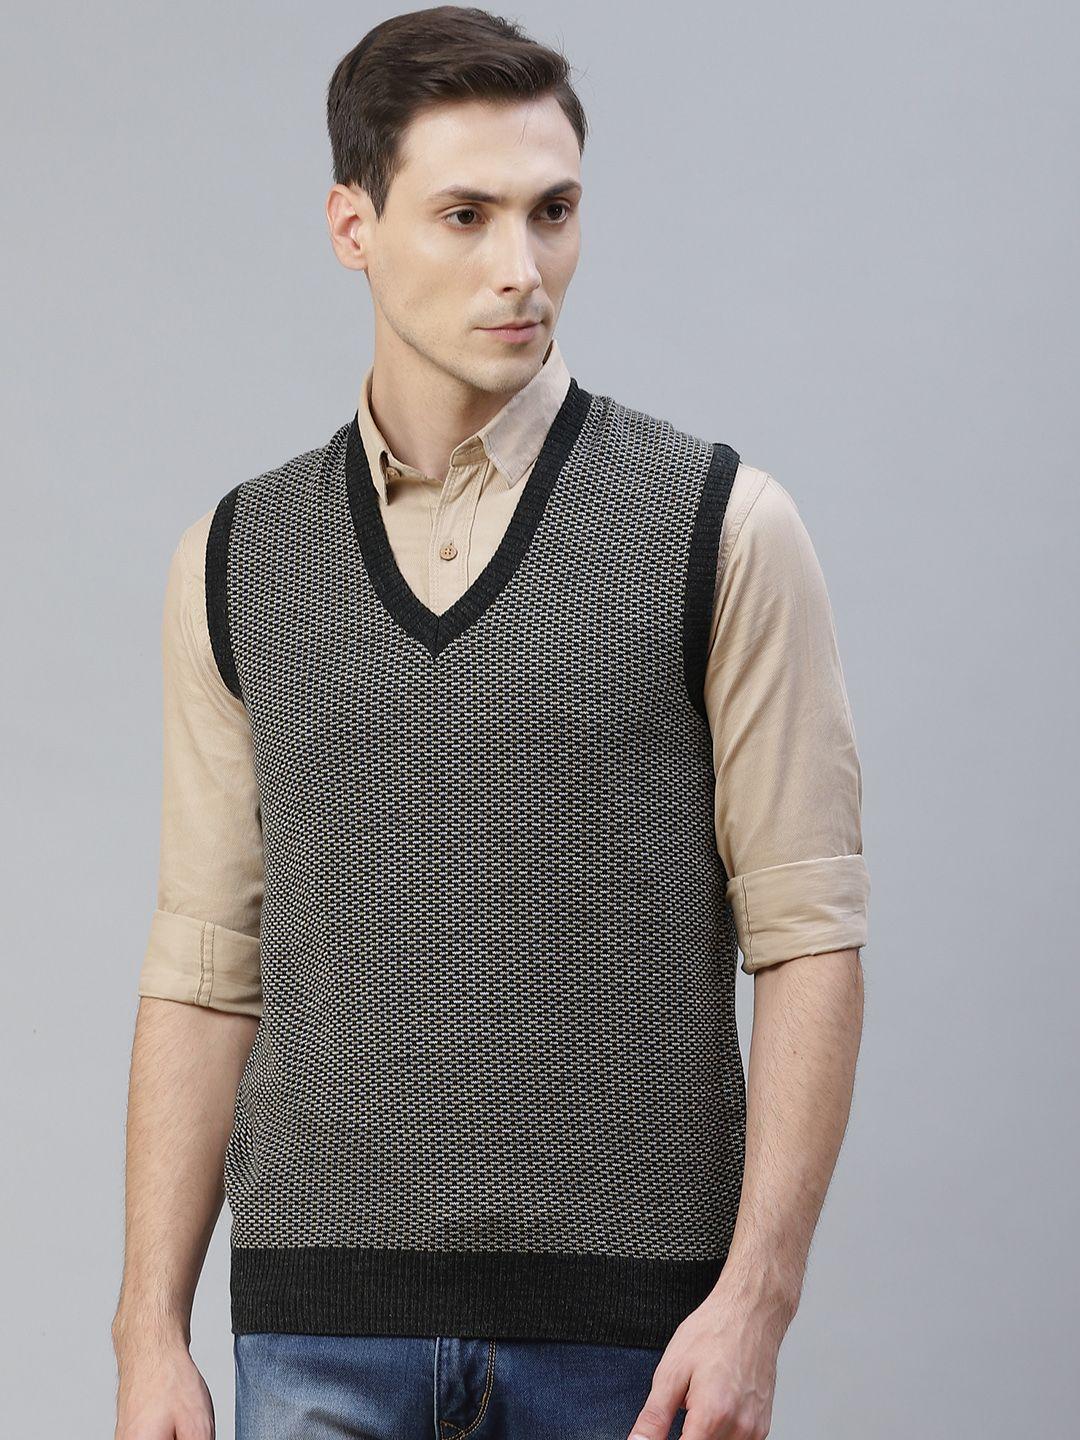 pierre carlo men black & grey woven design sweater vest